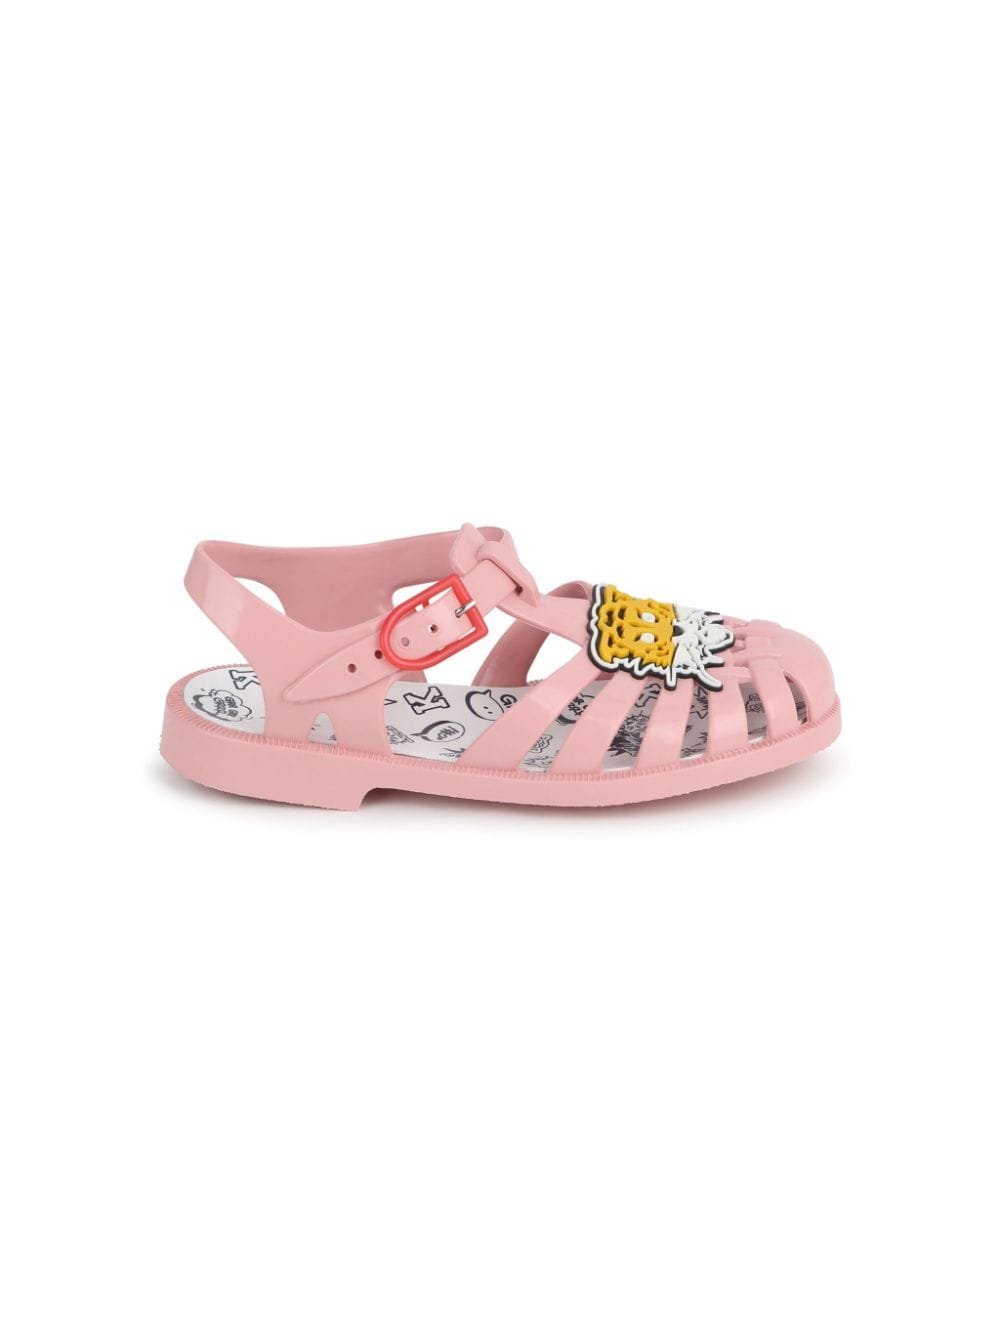 Sandali bambina rosa